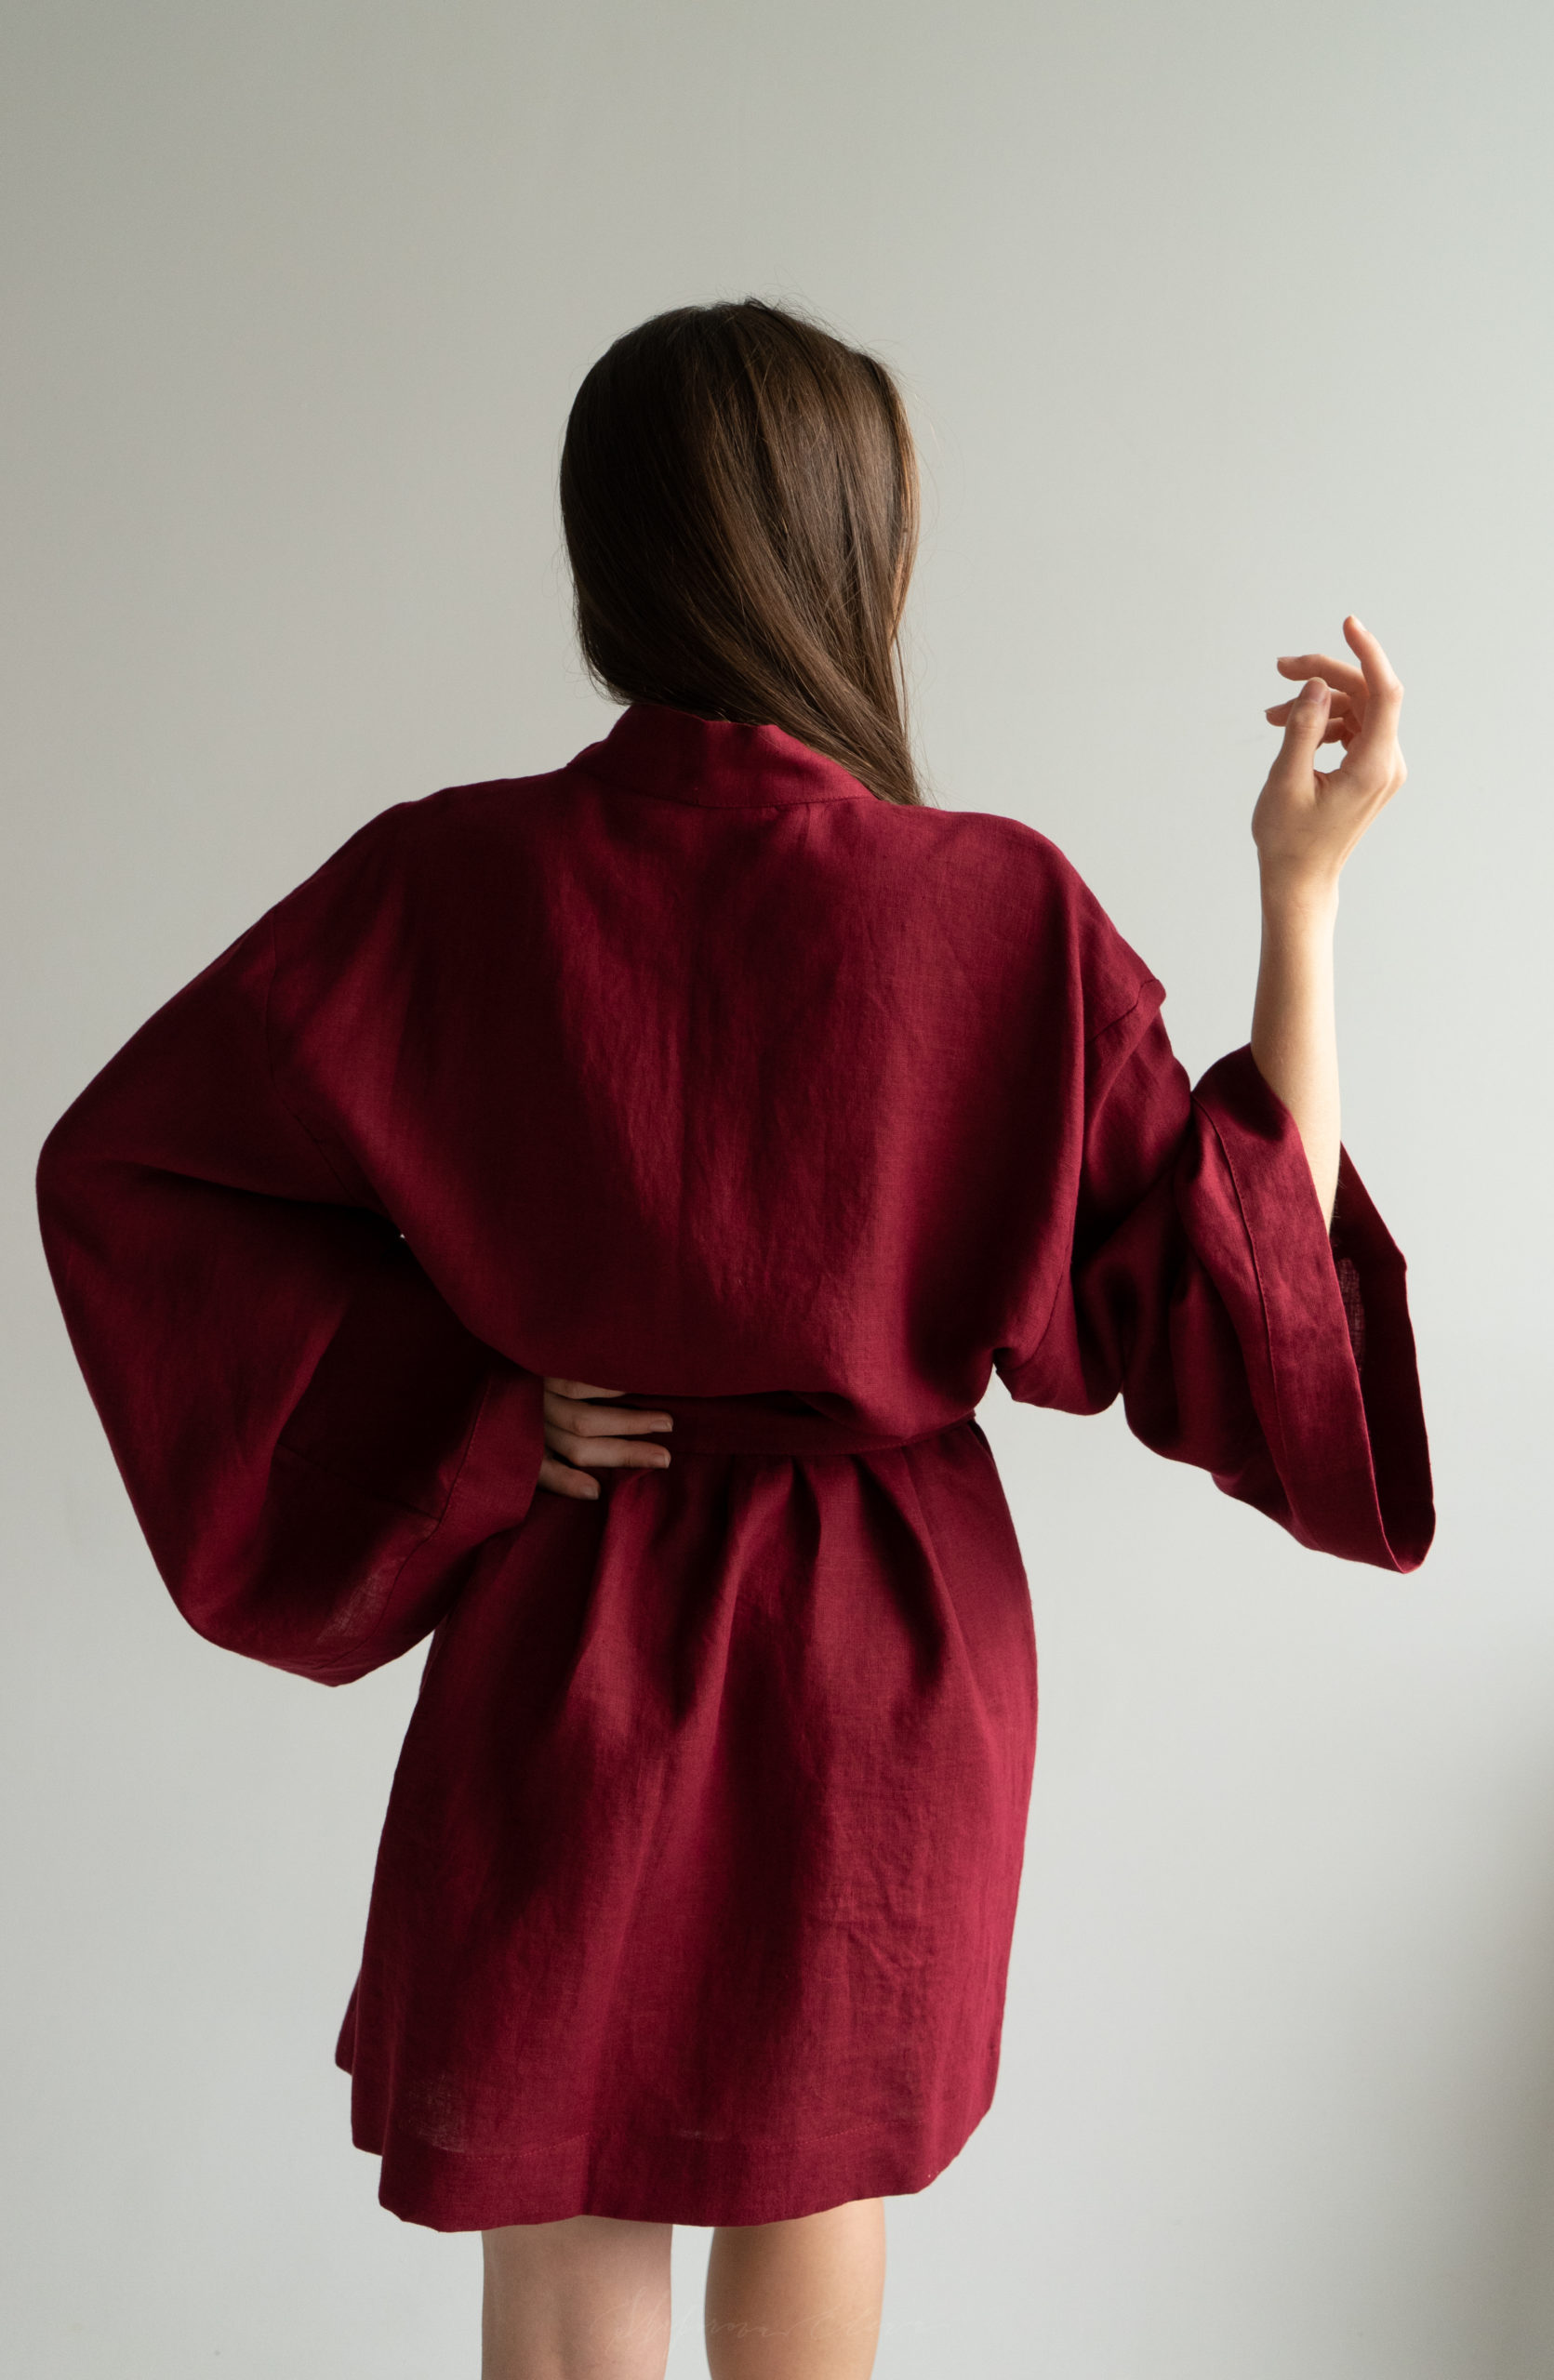 халат кимоно